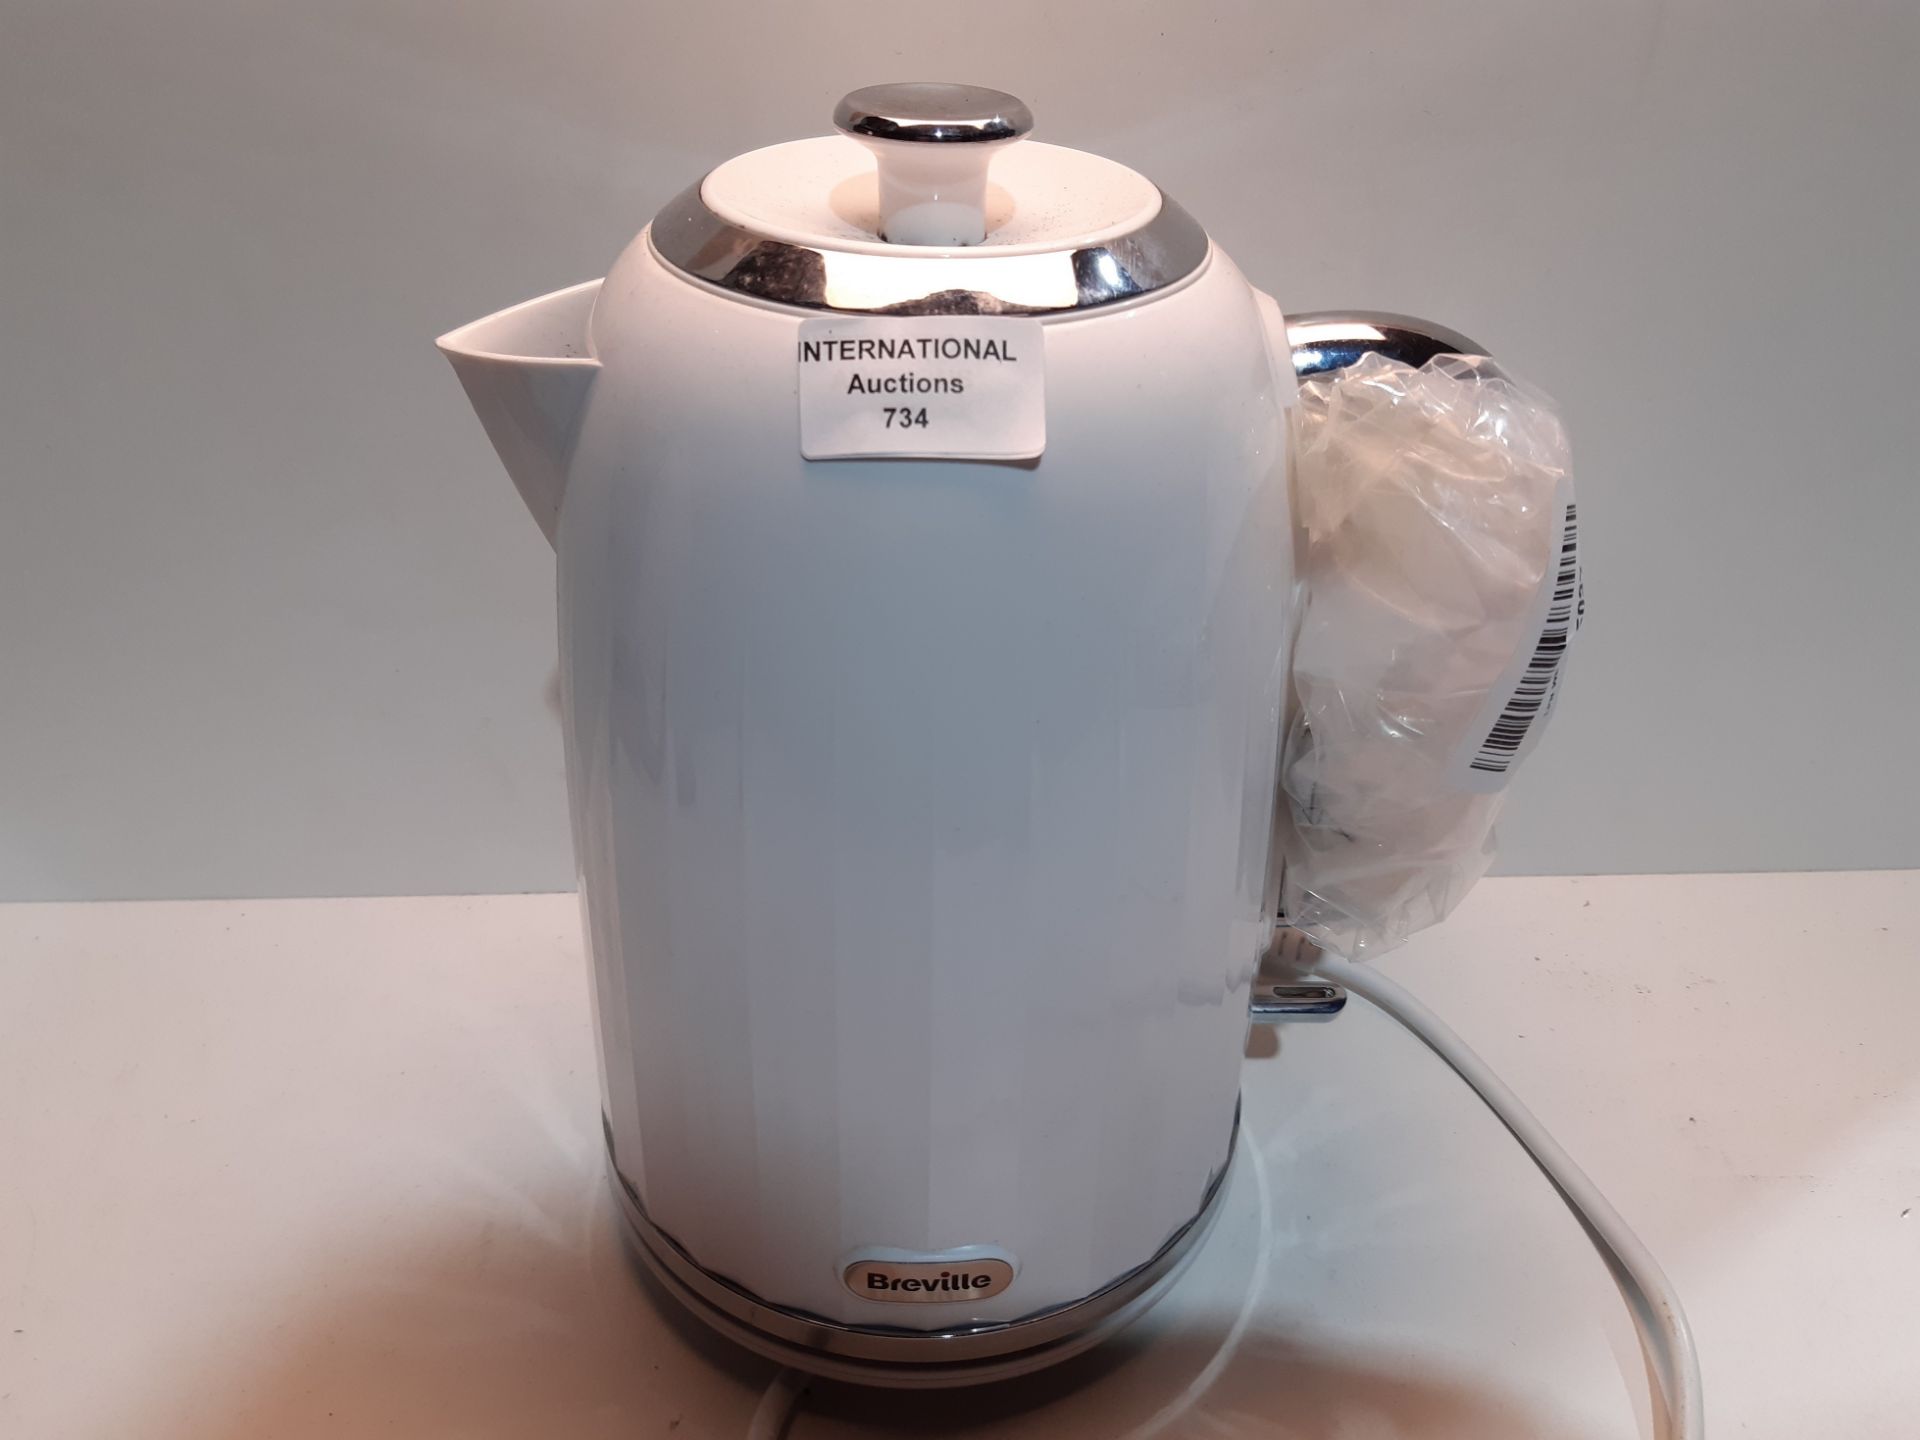 RRP £29.06 Breville Impressions Electric Kettle, 1.7 Litre, 3 KW Fast Boil, White [VKJ378]